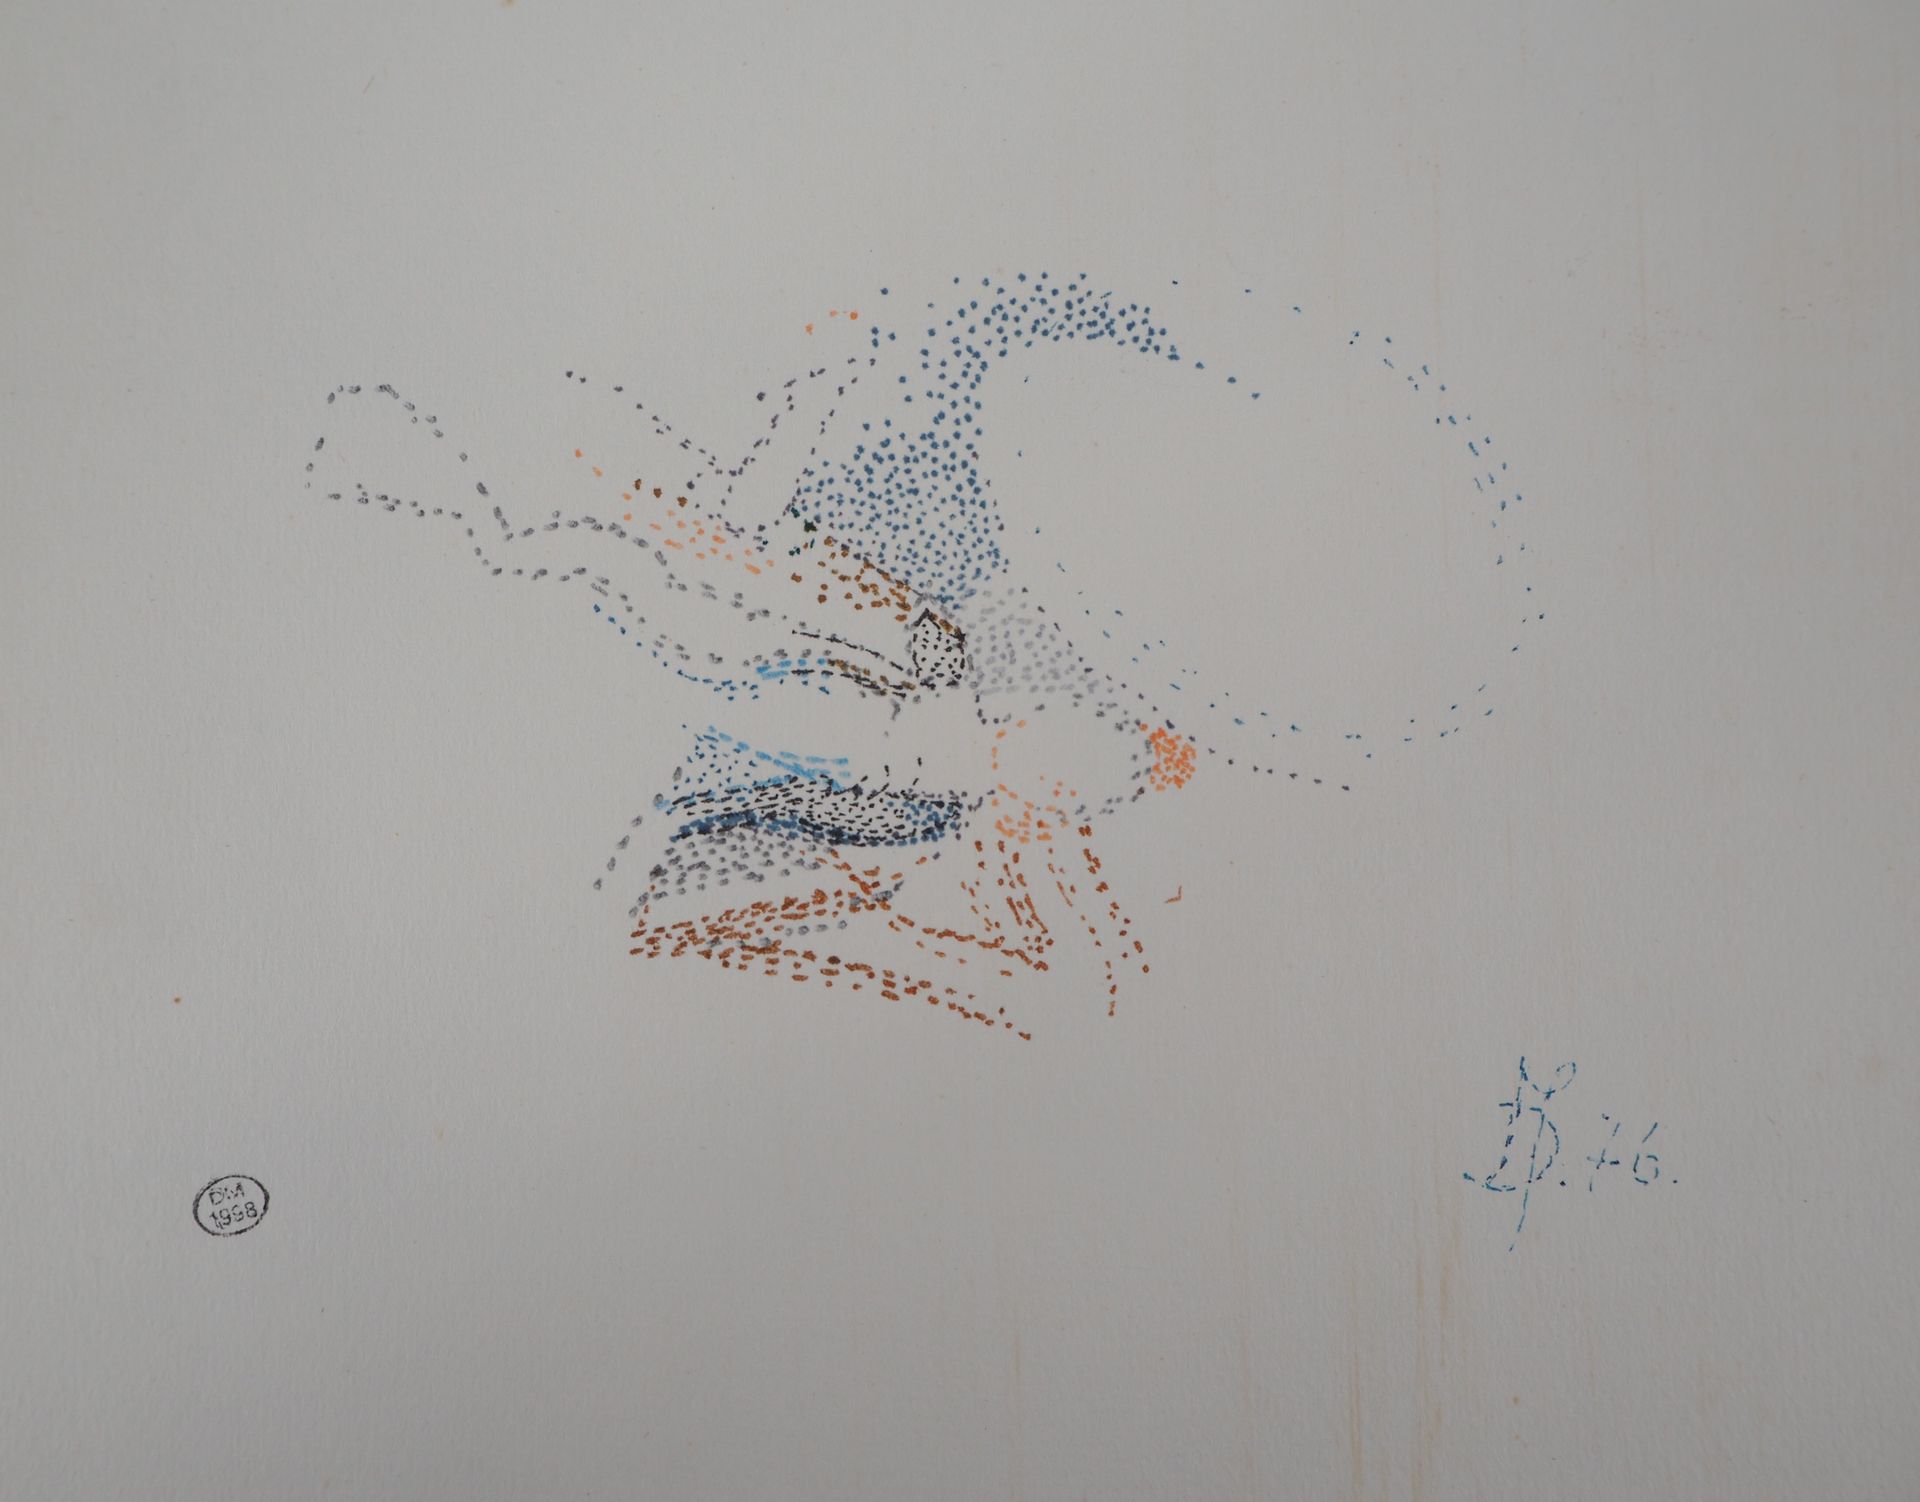 Dora MAAR 多拉-马尔(1907-1997)

躺着的女人

细纹纸上的水墨画

右下方有墨水签名

艺术家工作室的印章

32 x 24 厘米

状况&hellip;